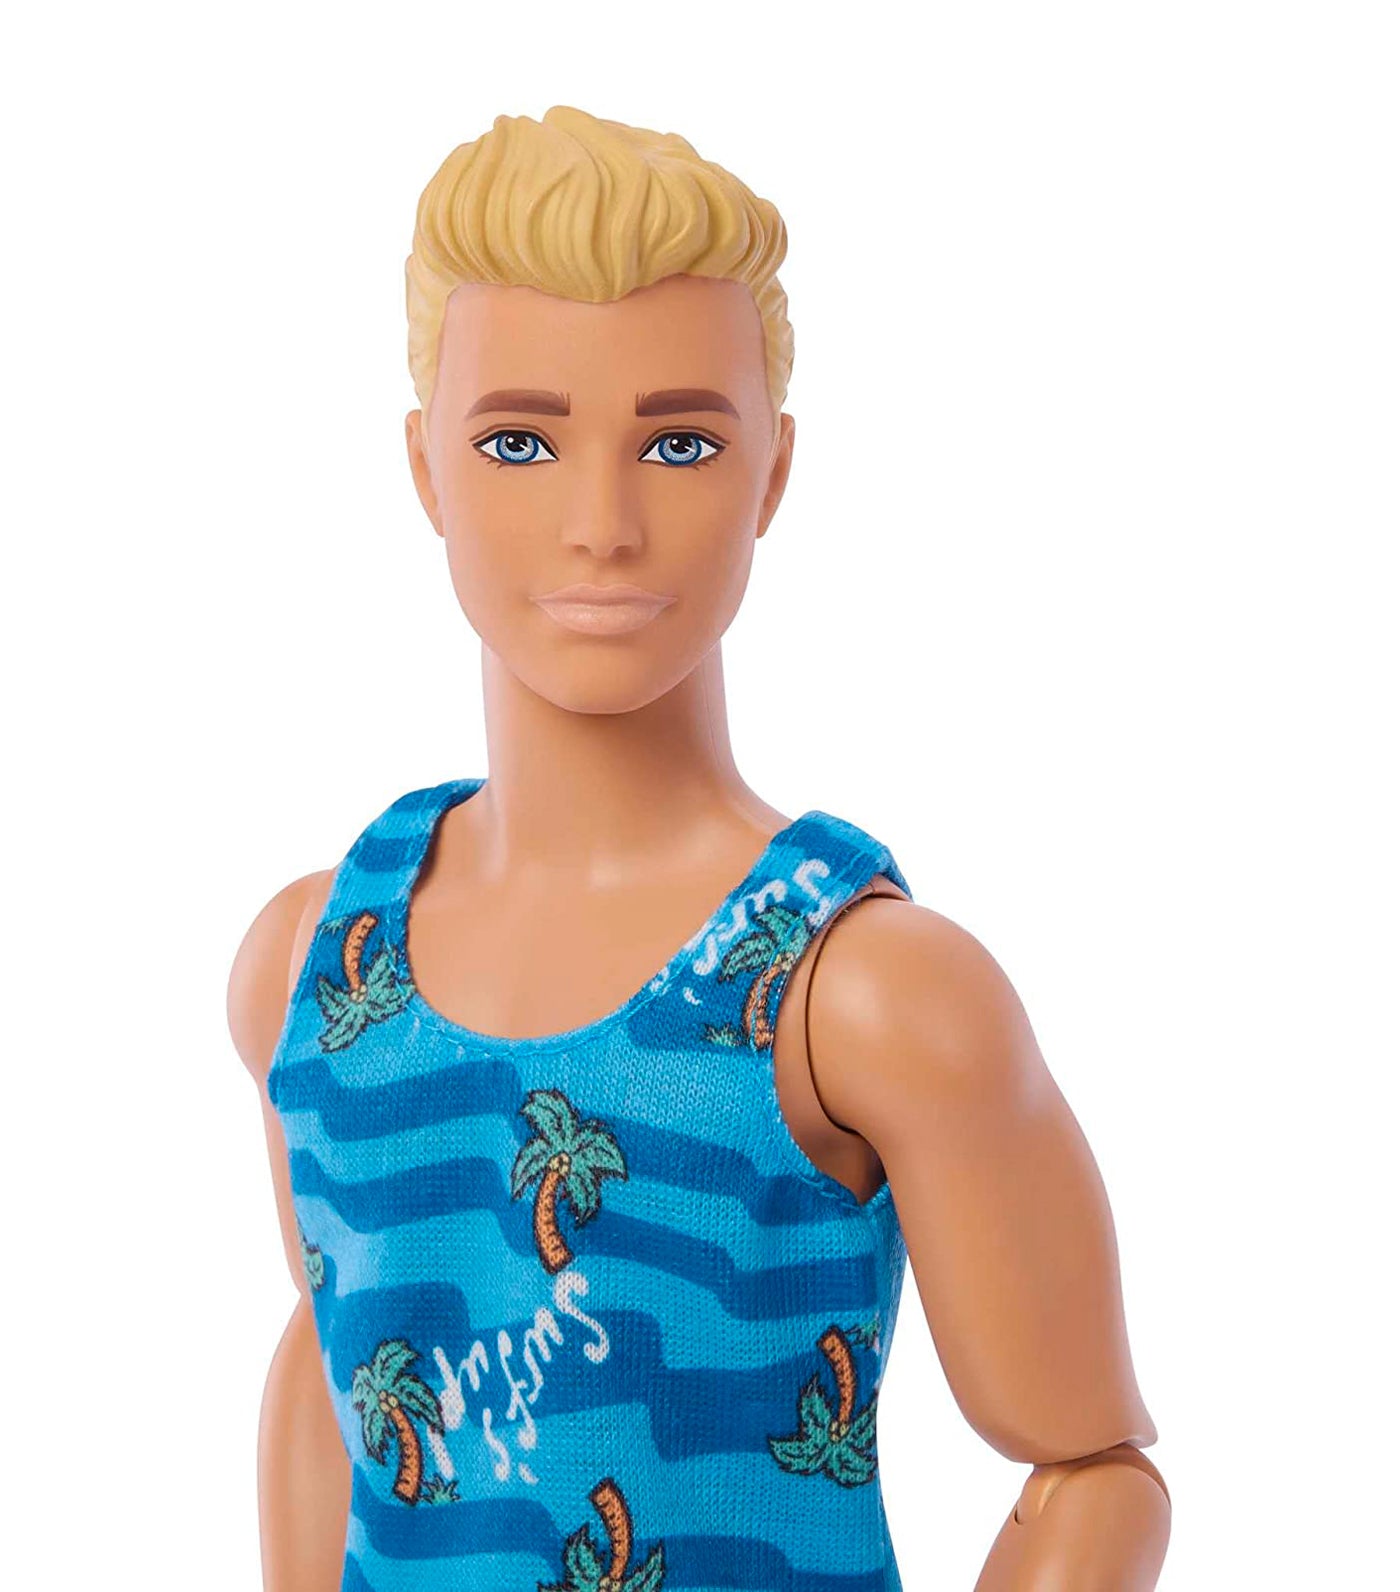 Barbie® Fab Ken Beach Doll with Surfboard